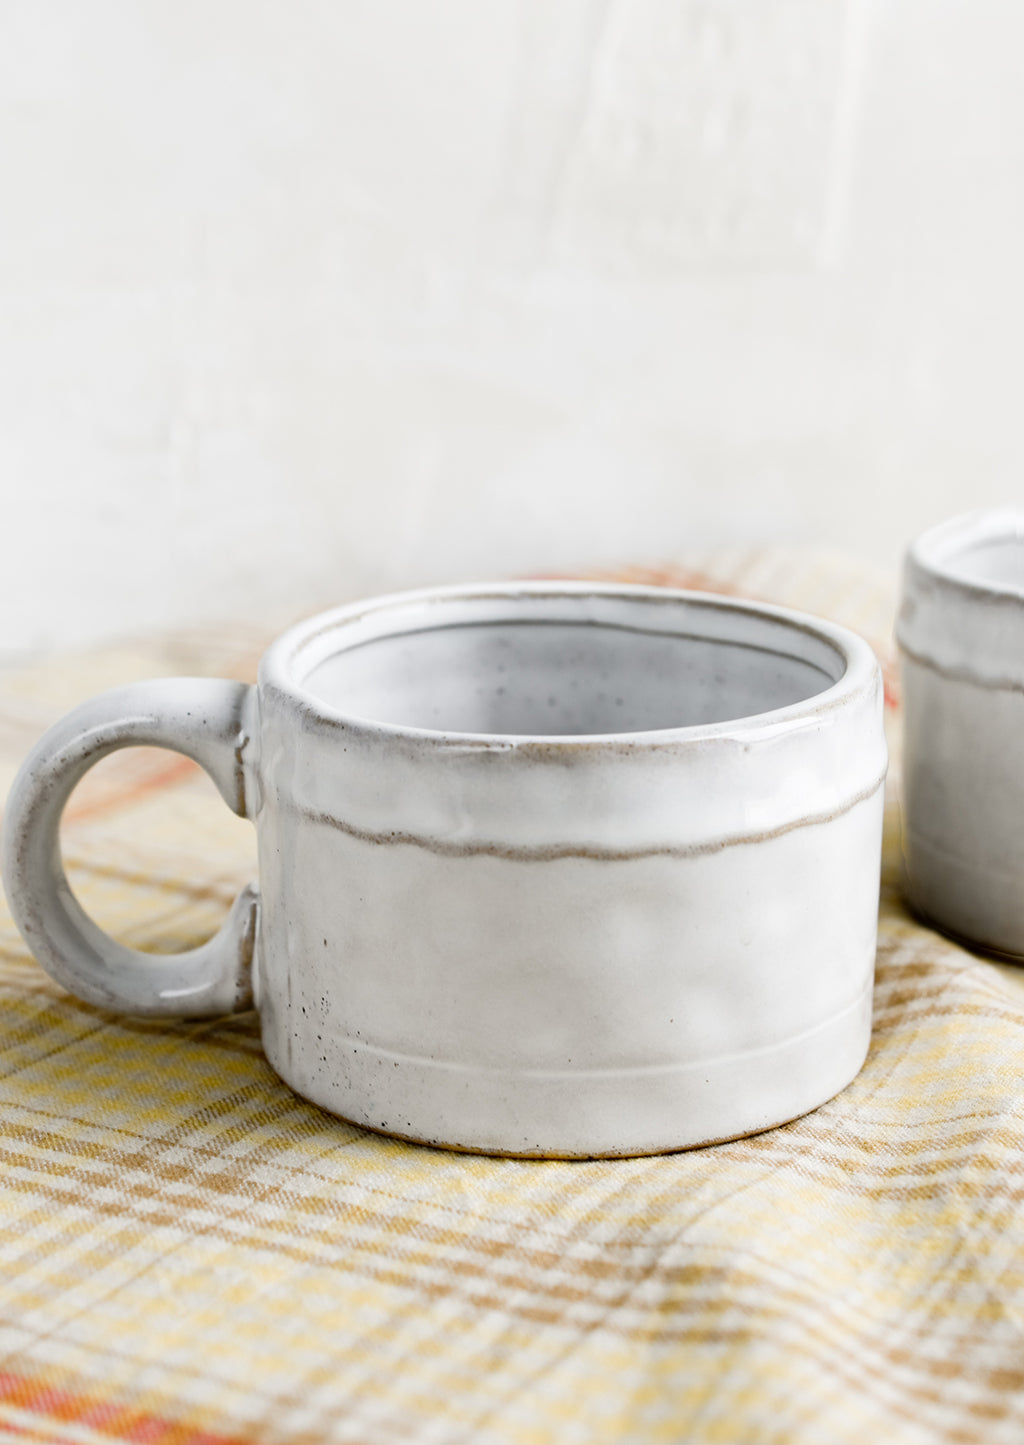 1: A ceramic mug in glossy white glaze with single wavy line detail.